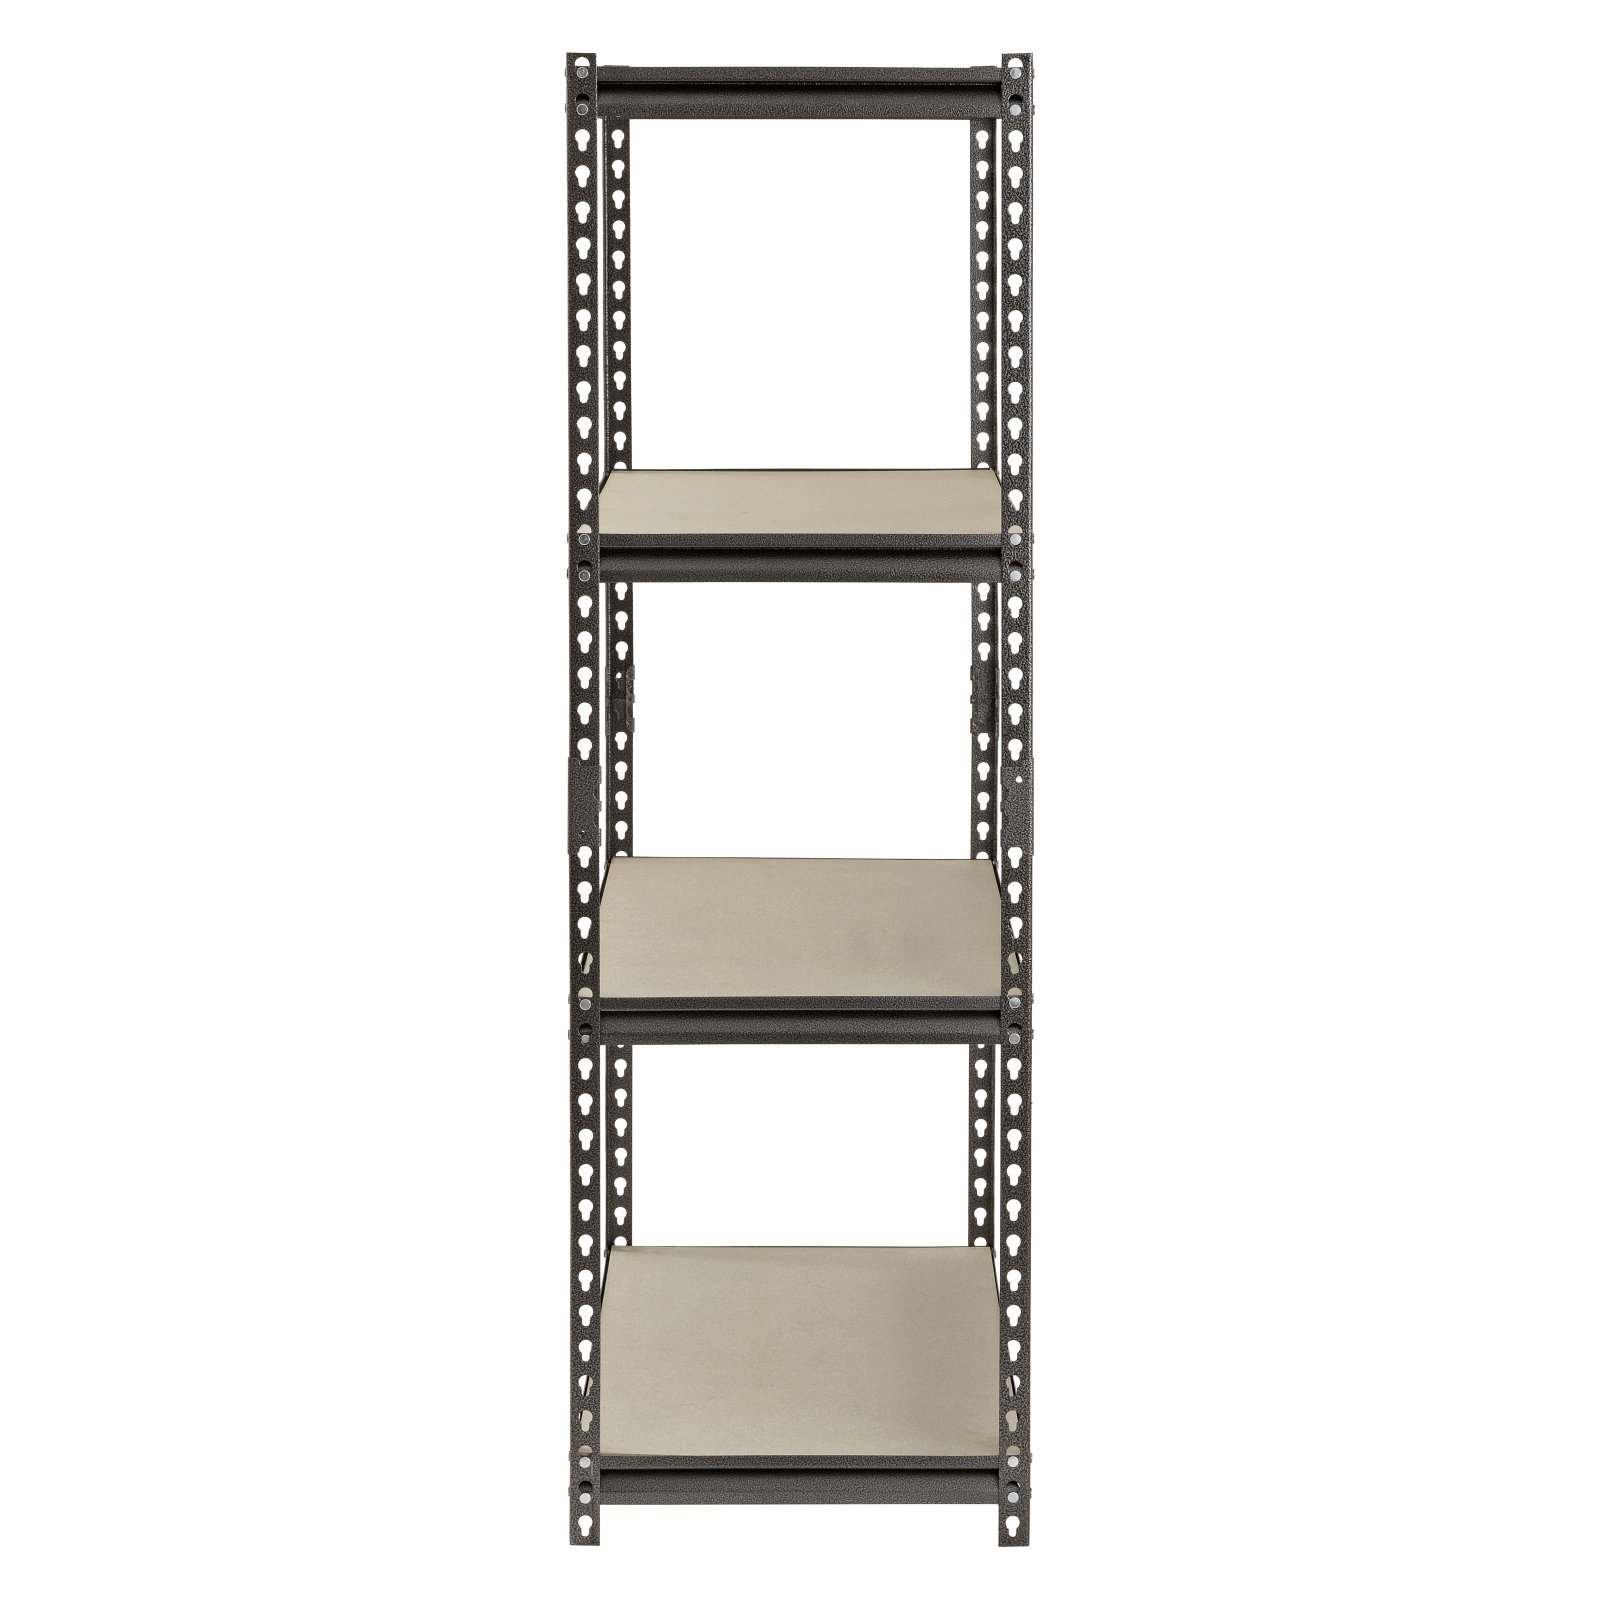 Muscle Rack 36"W x 18"D x 60"H 4-Shelf Steel Freestanding Shelves; 500 lbs. Capacity per Shelf; Silver - image 2 of 3